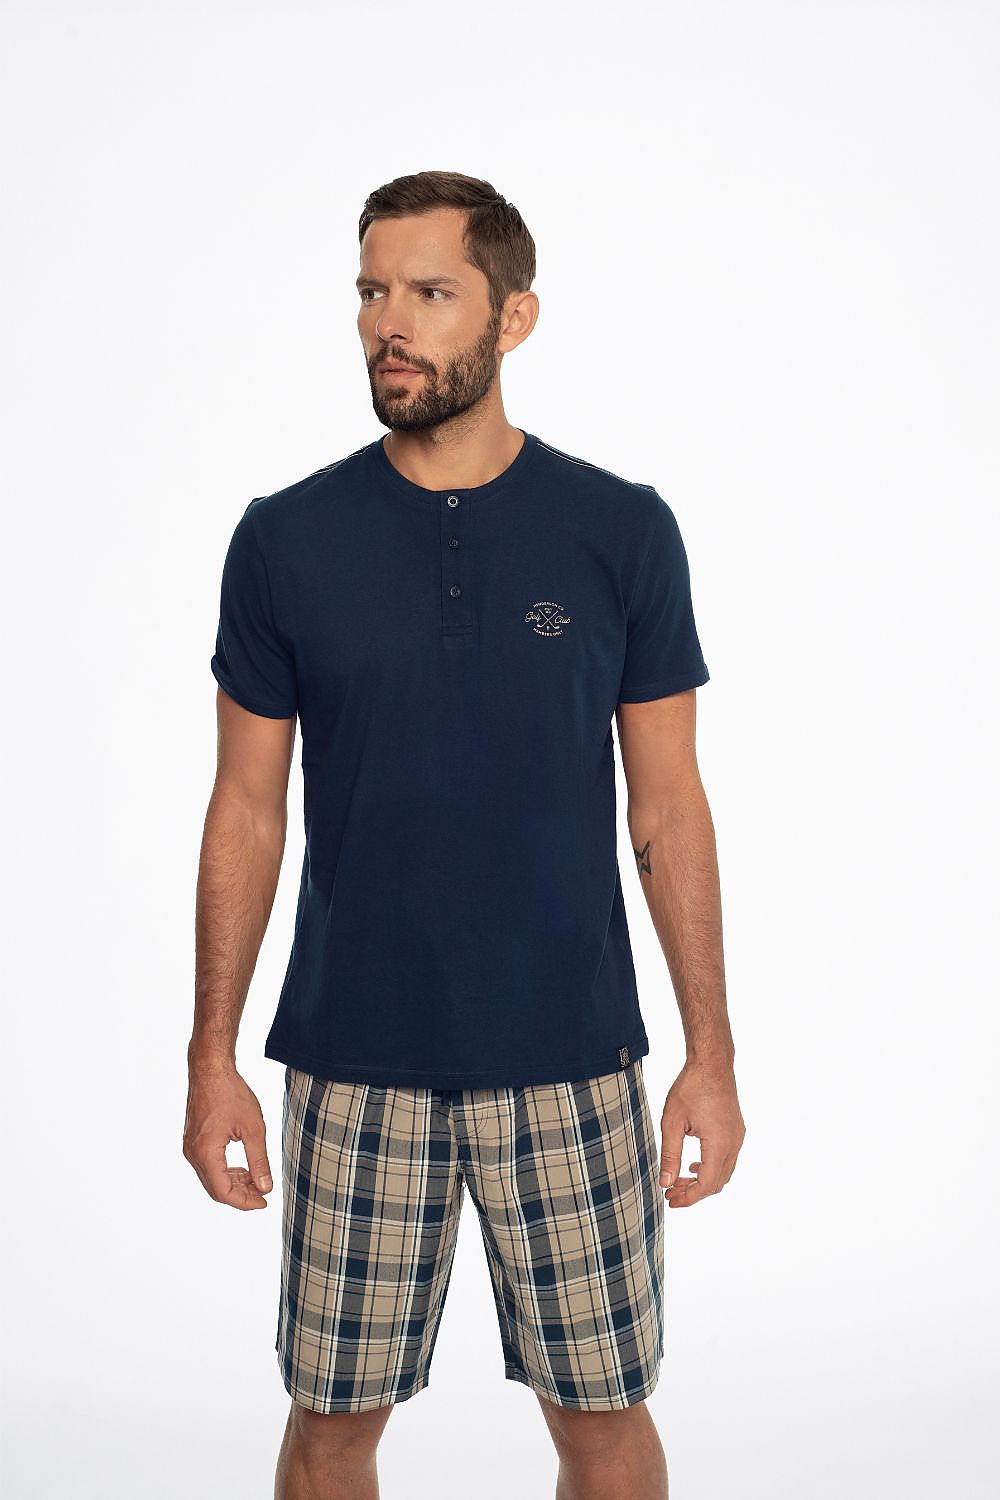 TEEK - Mens Golf Button Top Plaid Shorts Pajamas Set PAJAMA TEEK MH M  